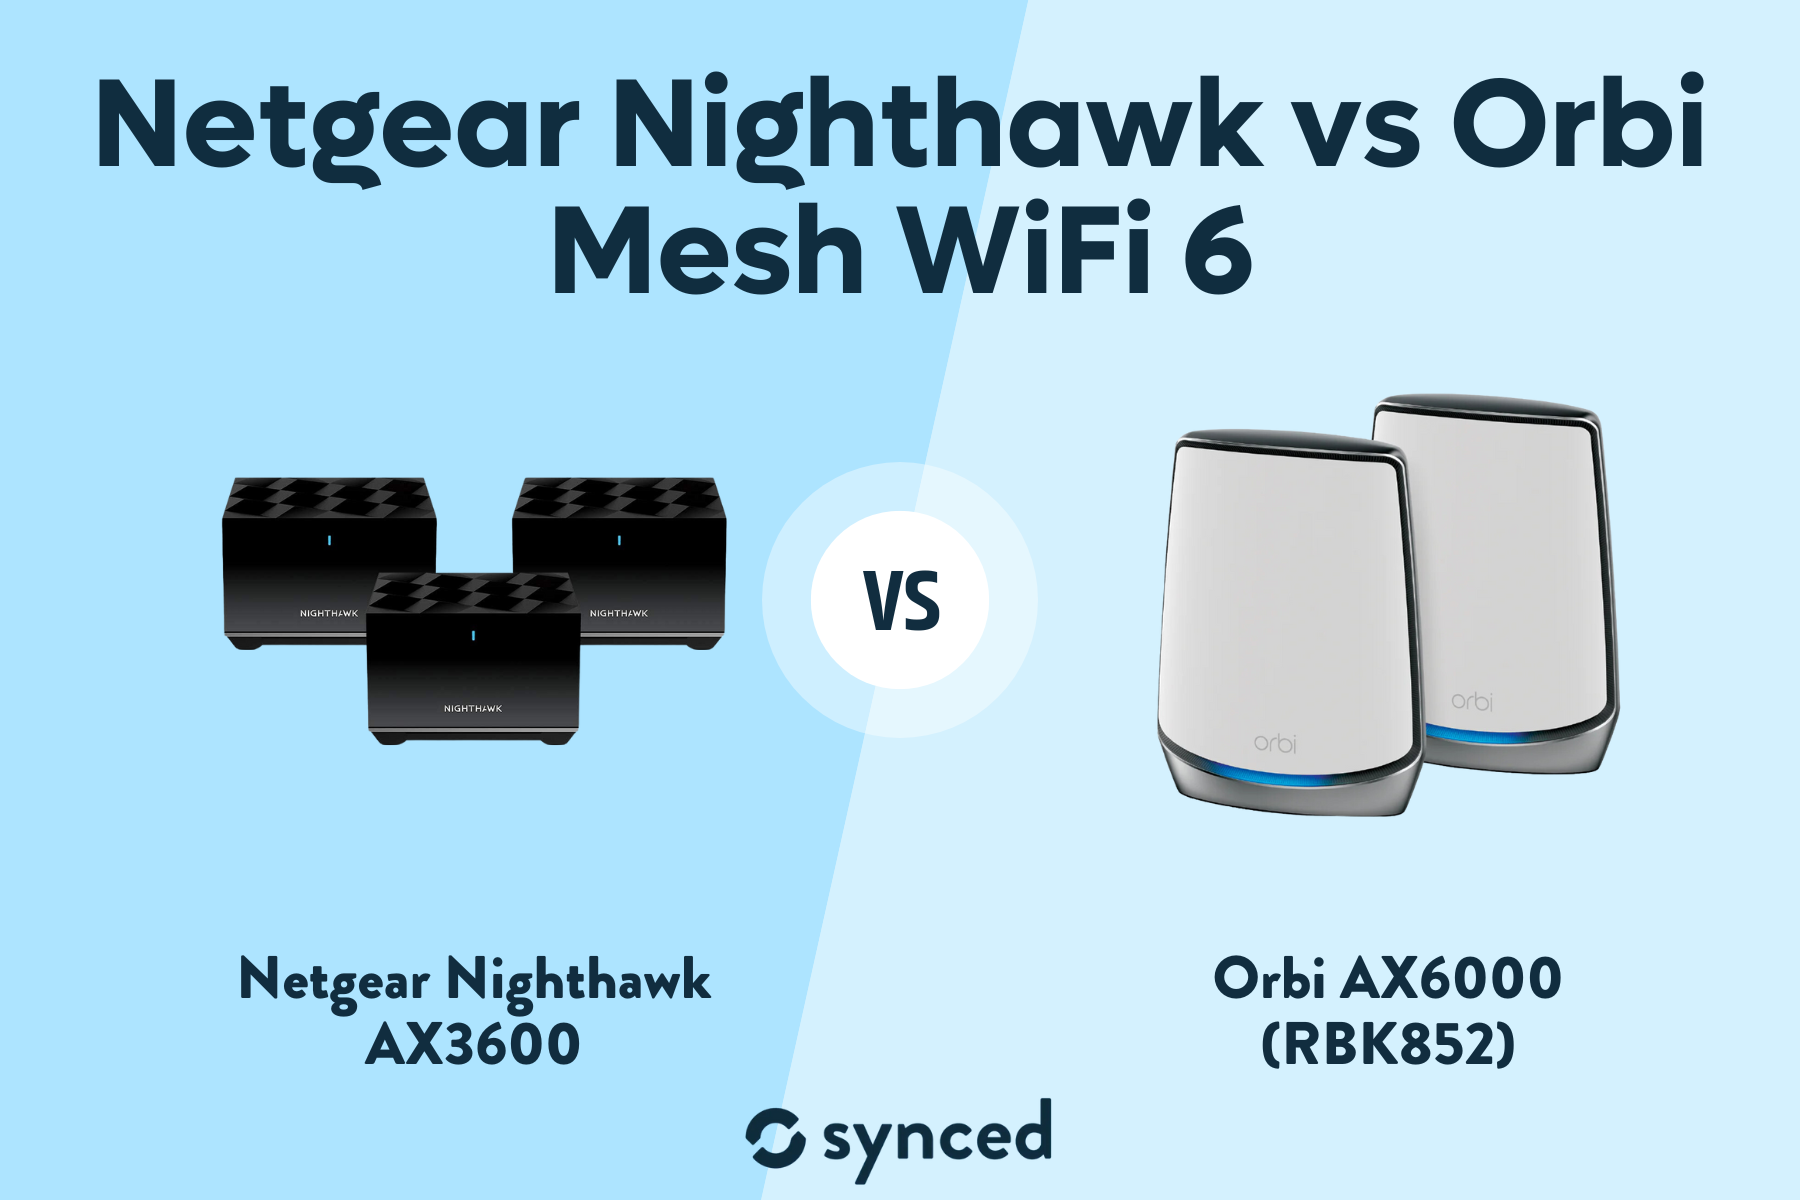 Netgear Nighthawk vs Orbi Mesh WiFi 6